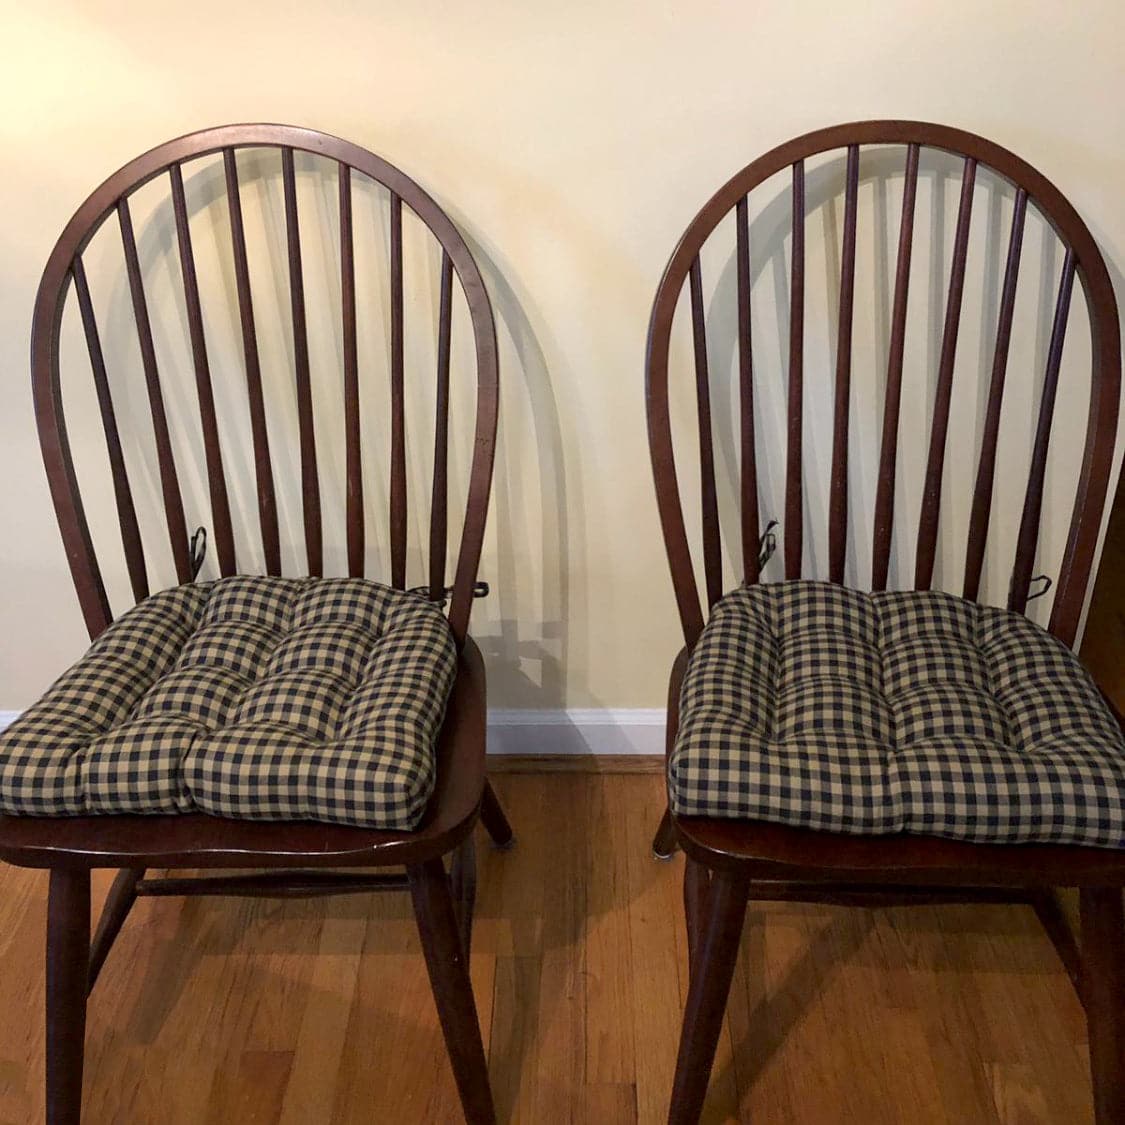 Checkers Black & Tan Dining Chair Pad - Latex Foam Fill - Rustic Decor